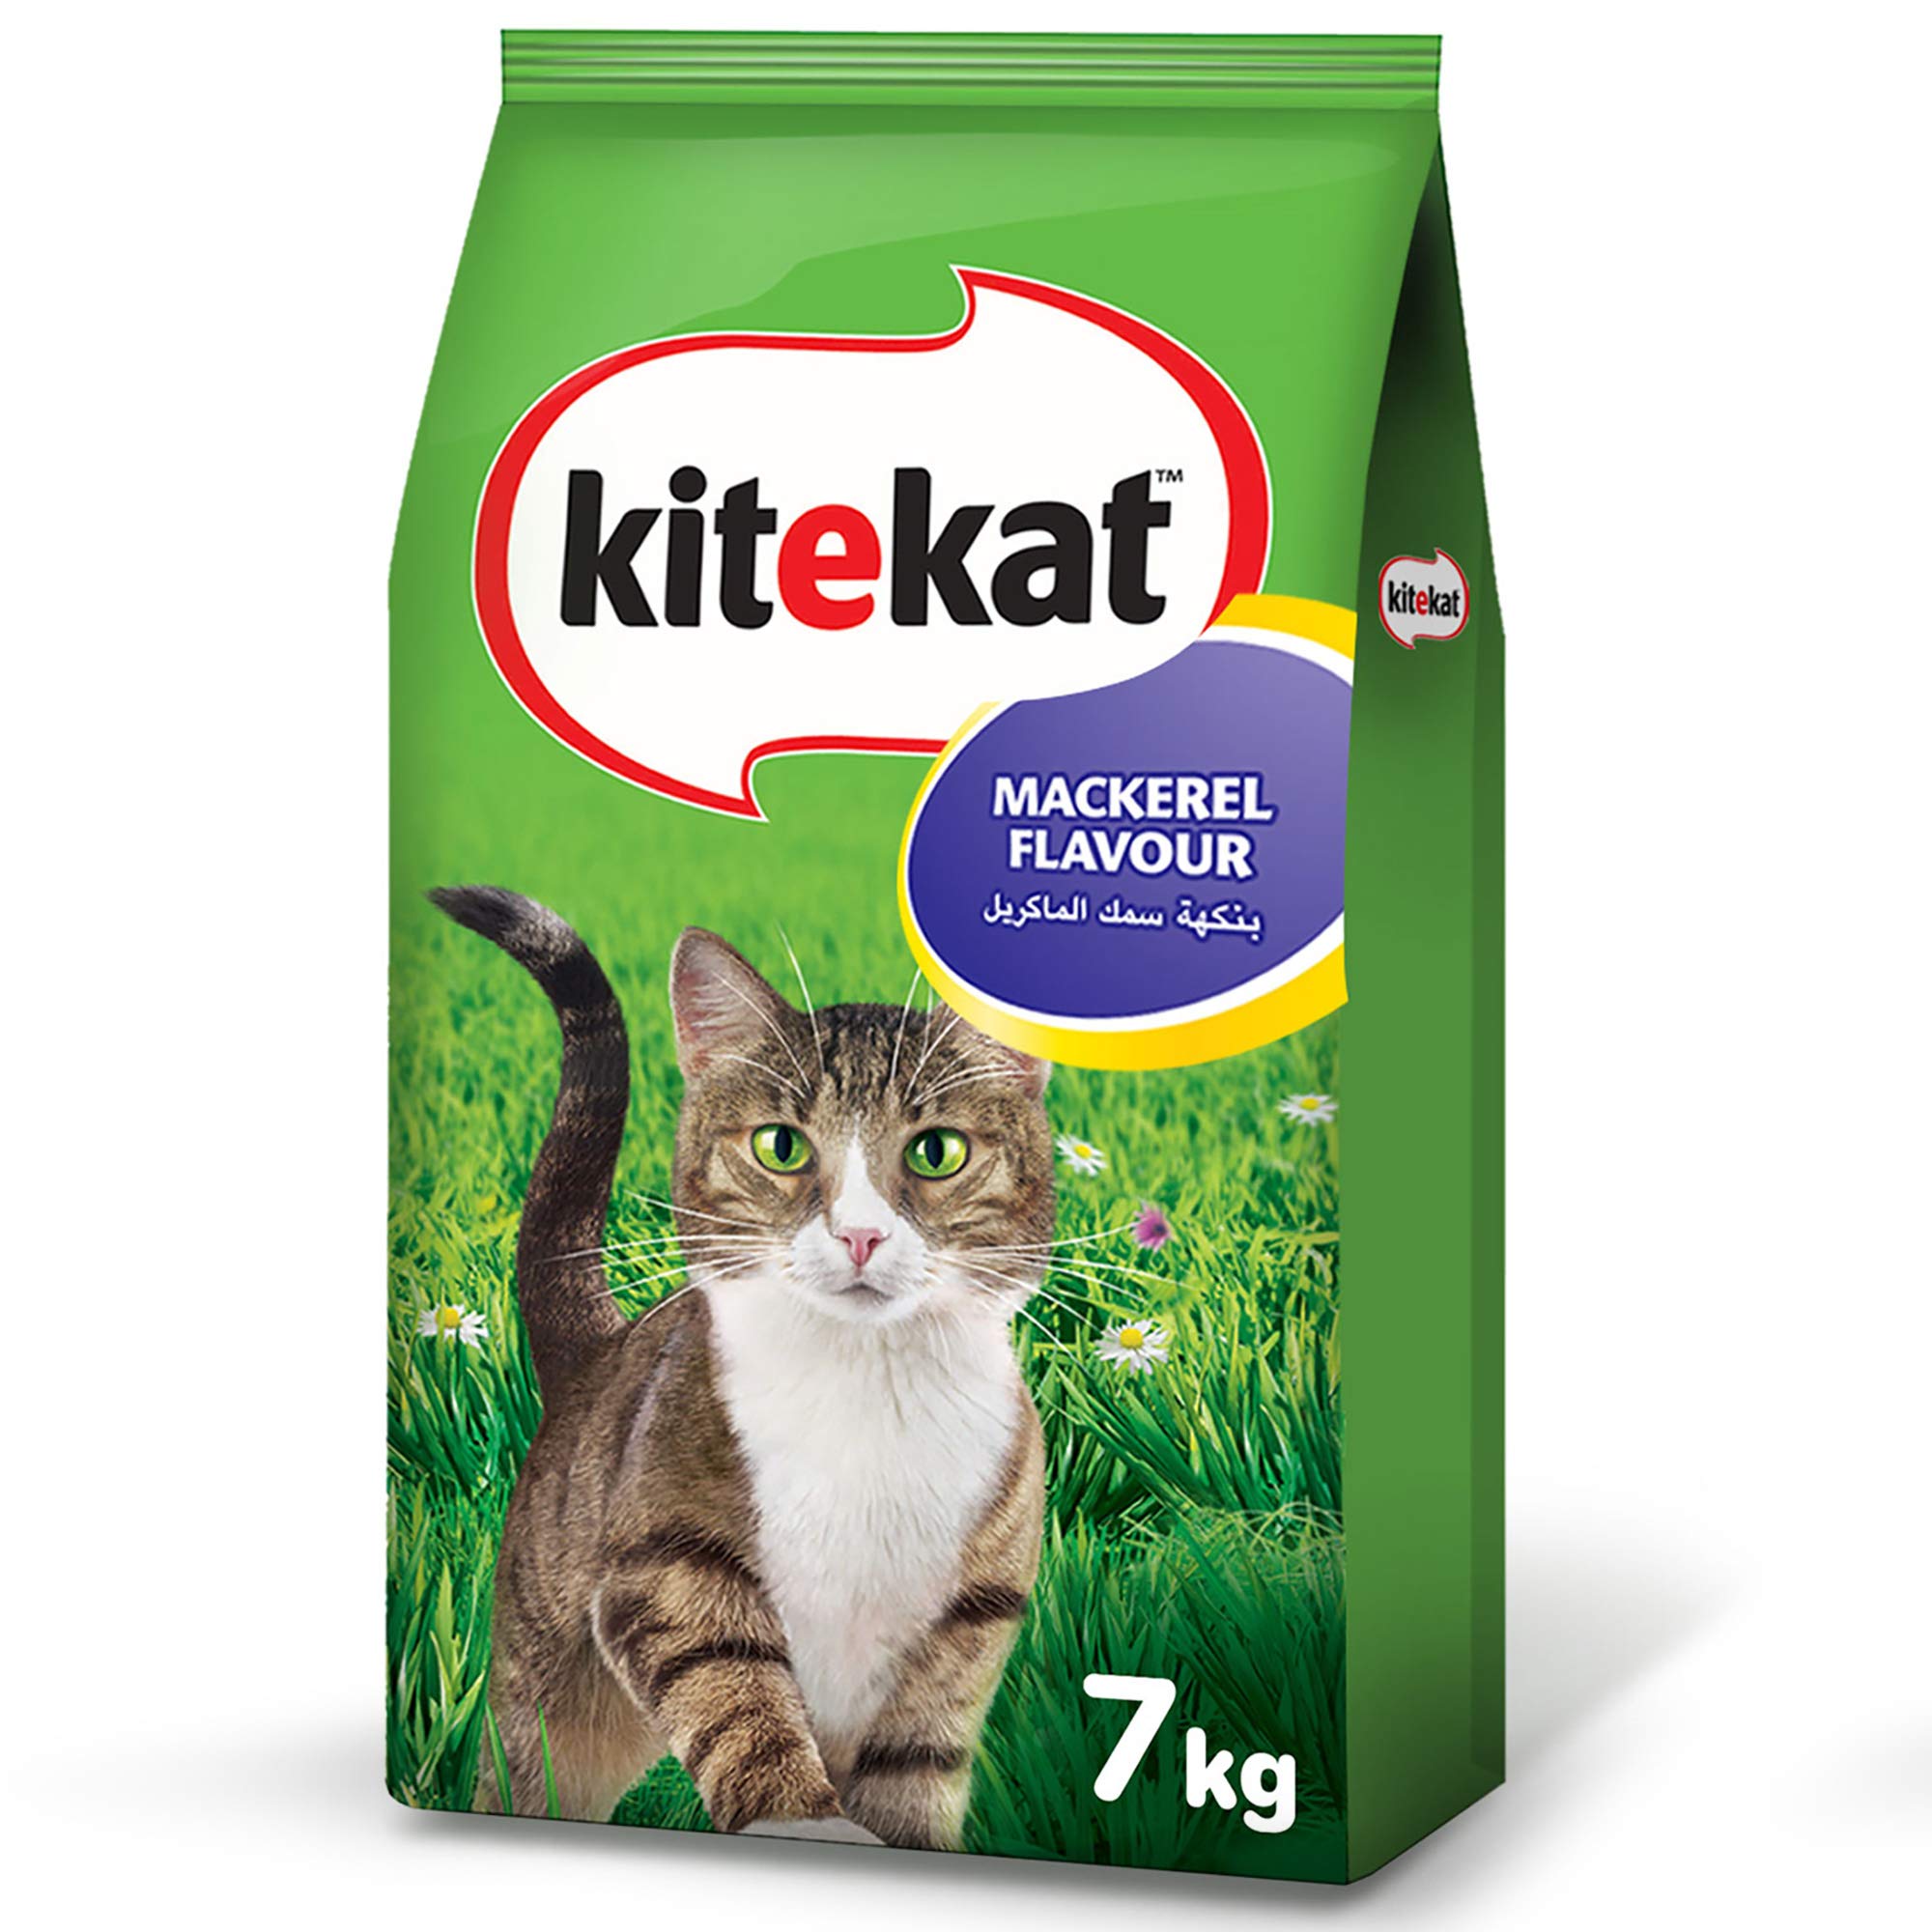 Kitekat Mackerel, Dry Cat Food